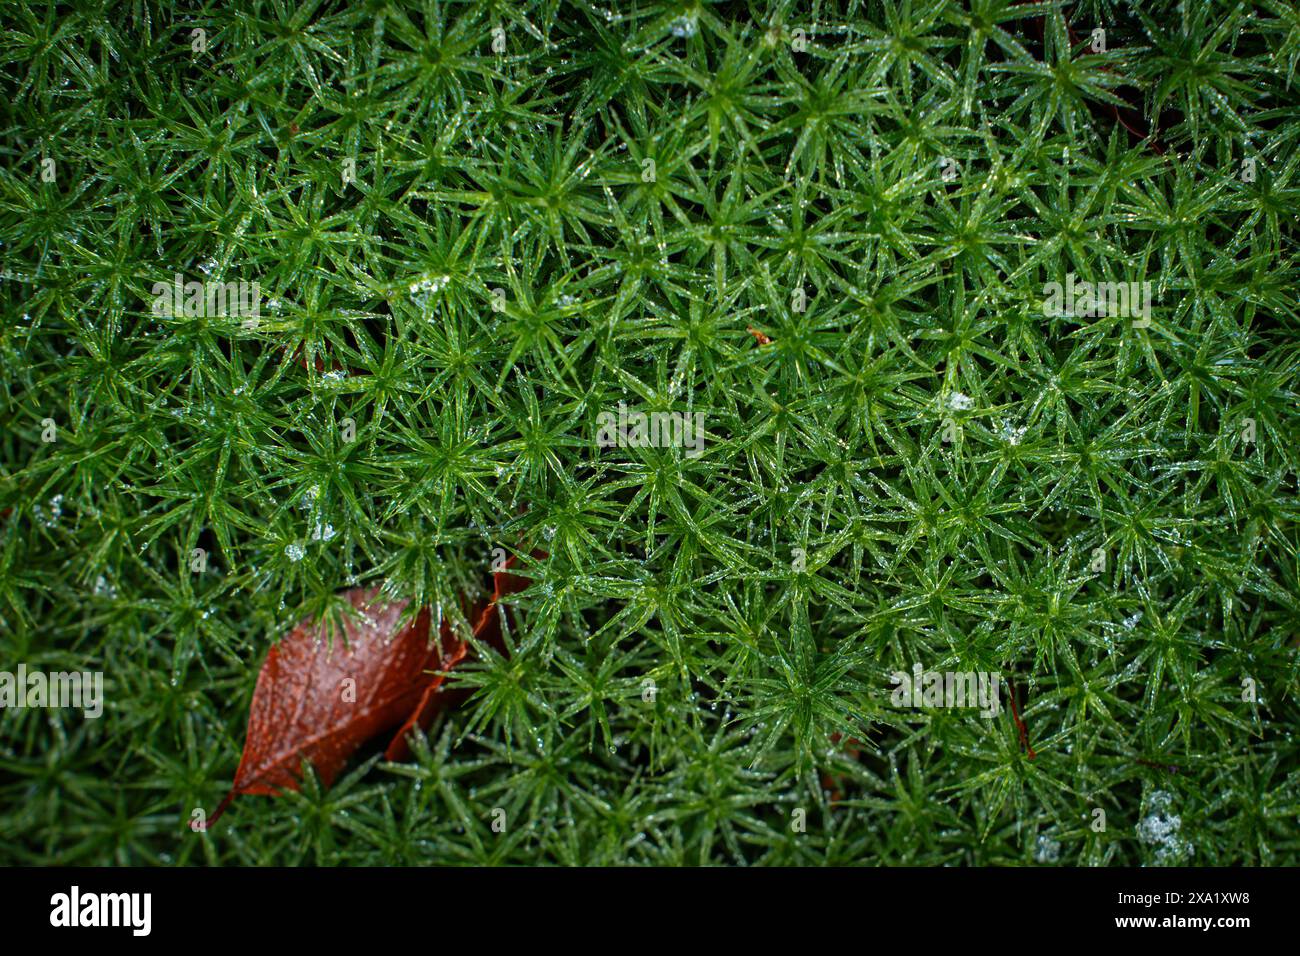 Wet Irish moss (Sagina subulata) on the ground Stock Photo